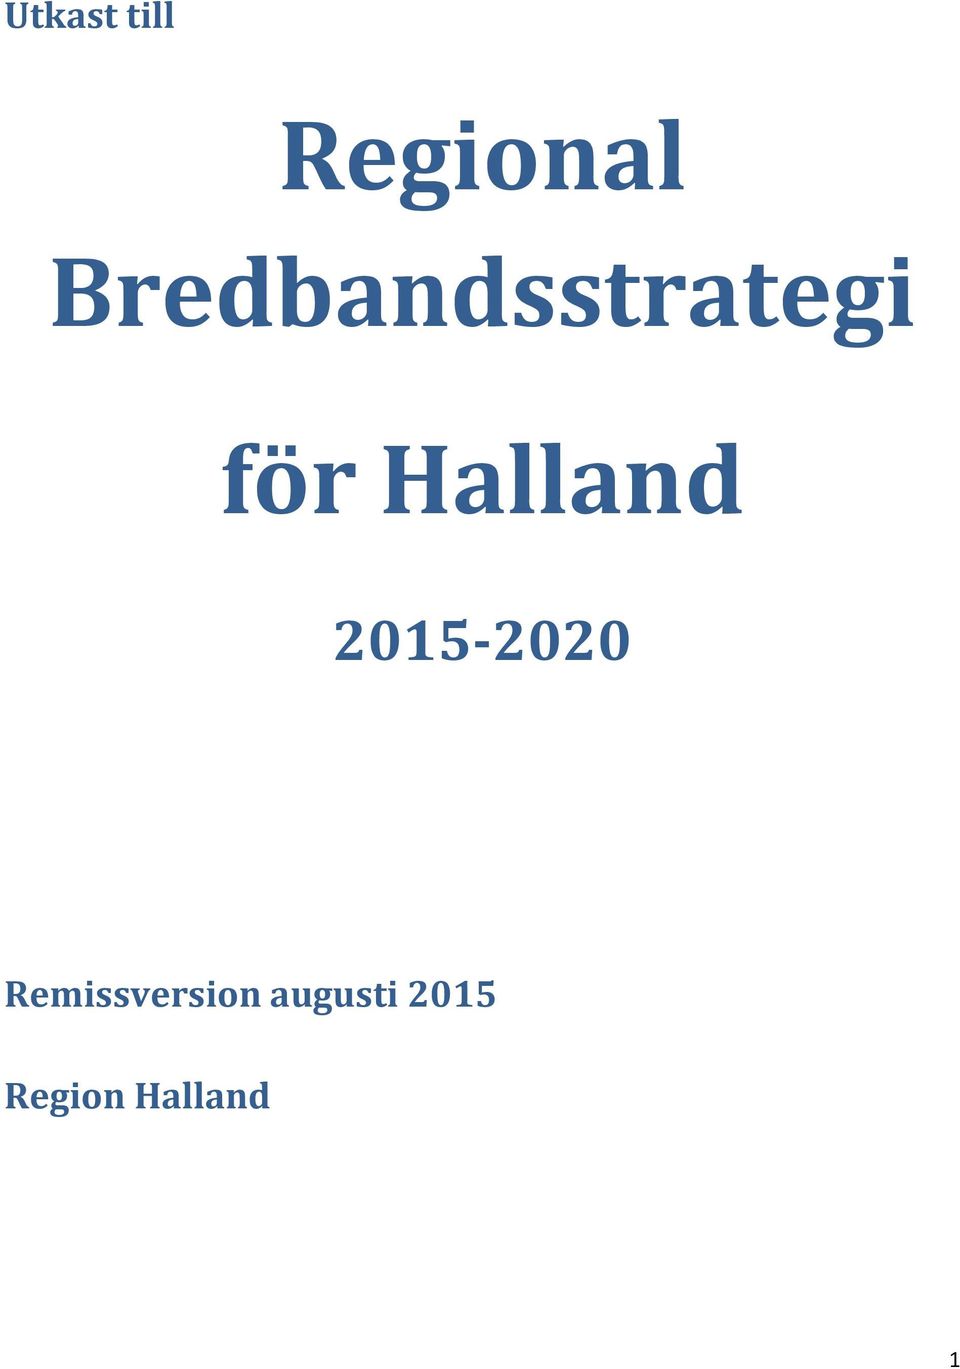 Halland 2015-2020